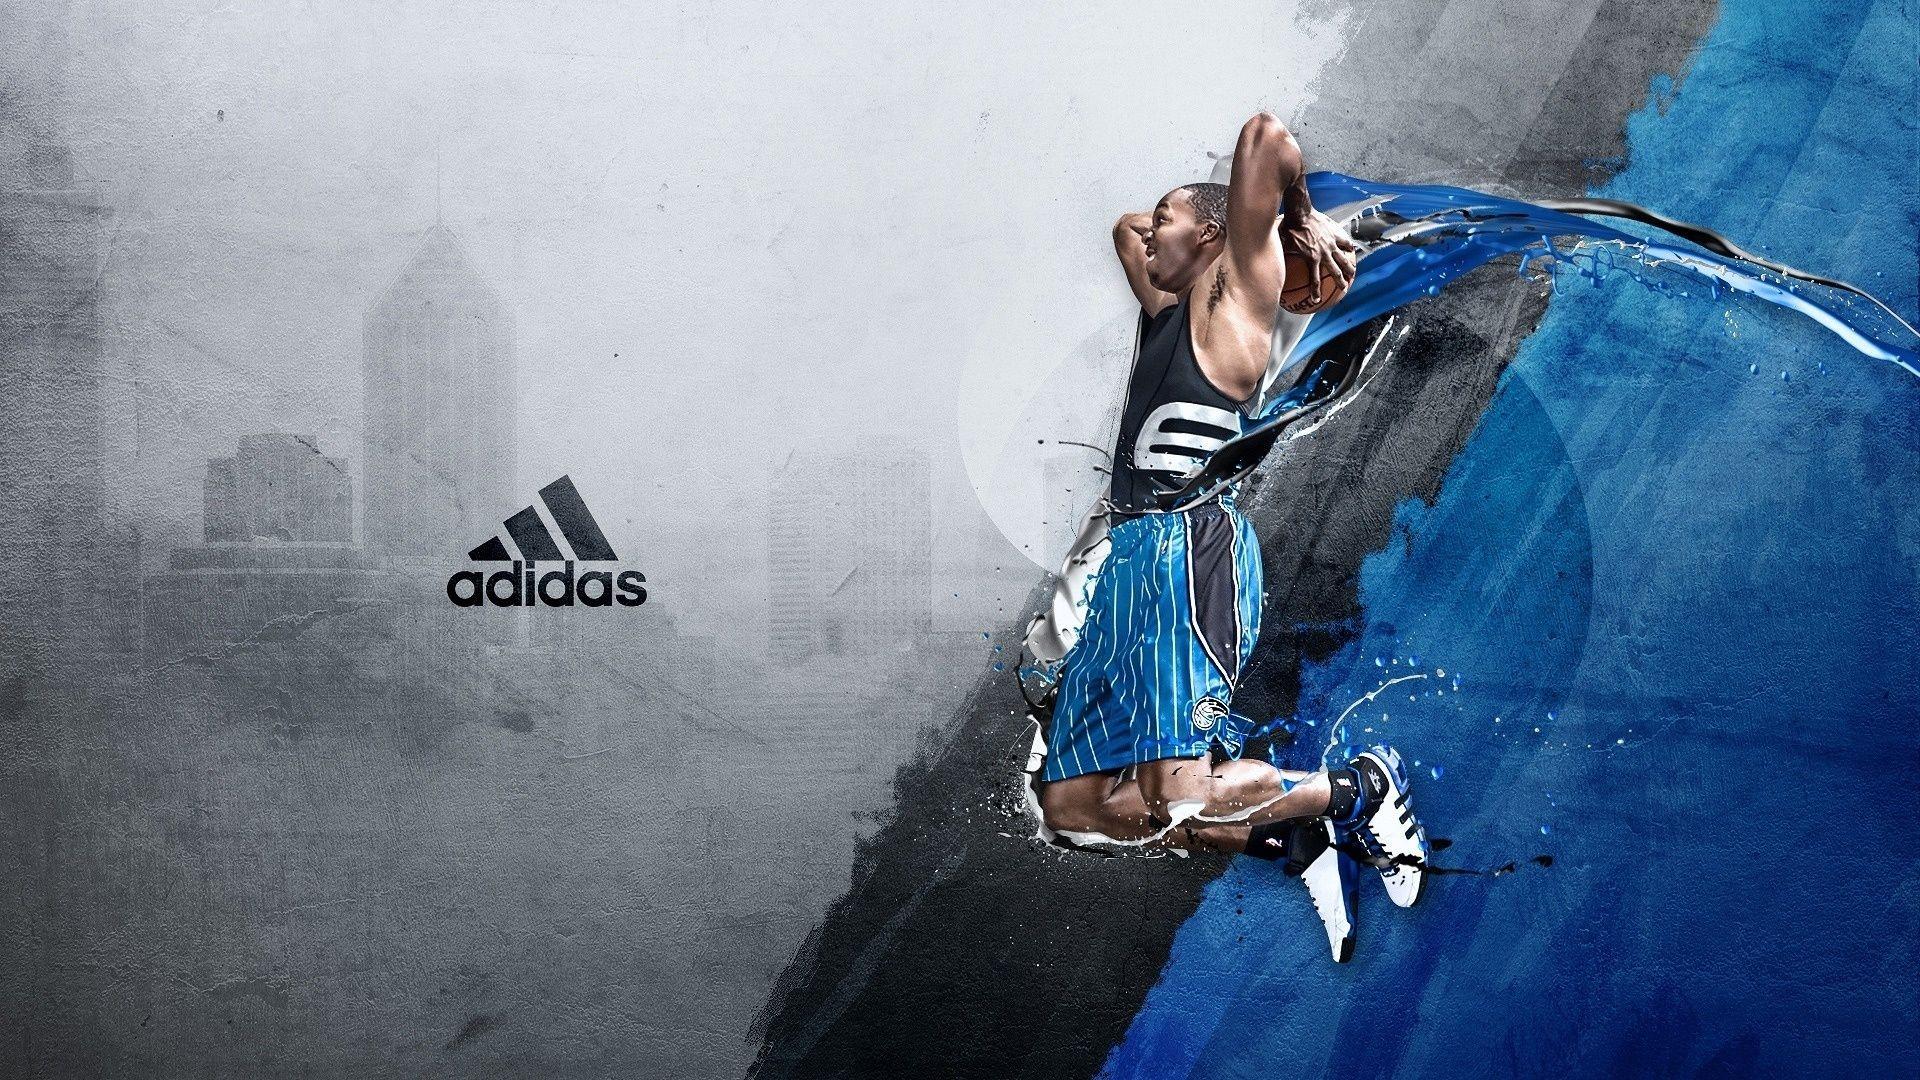 Adidas Basketball Wallpapers - Top Free 